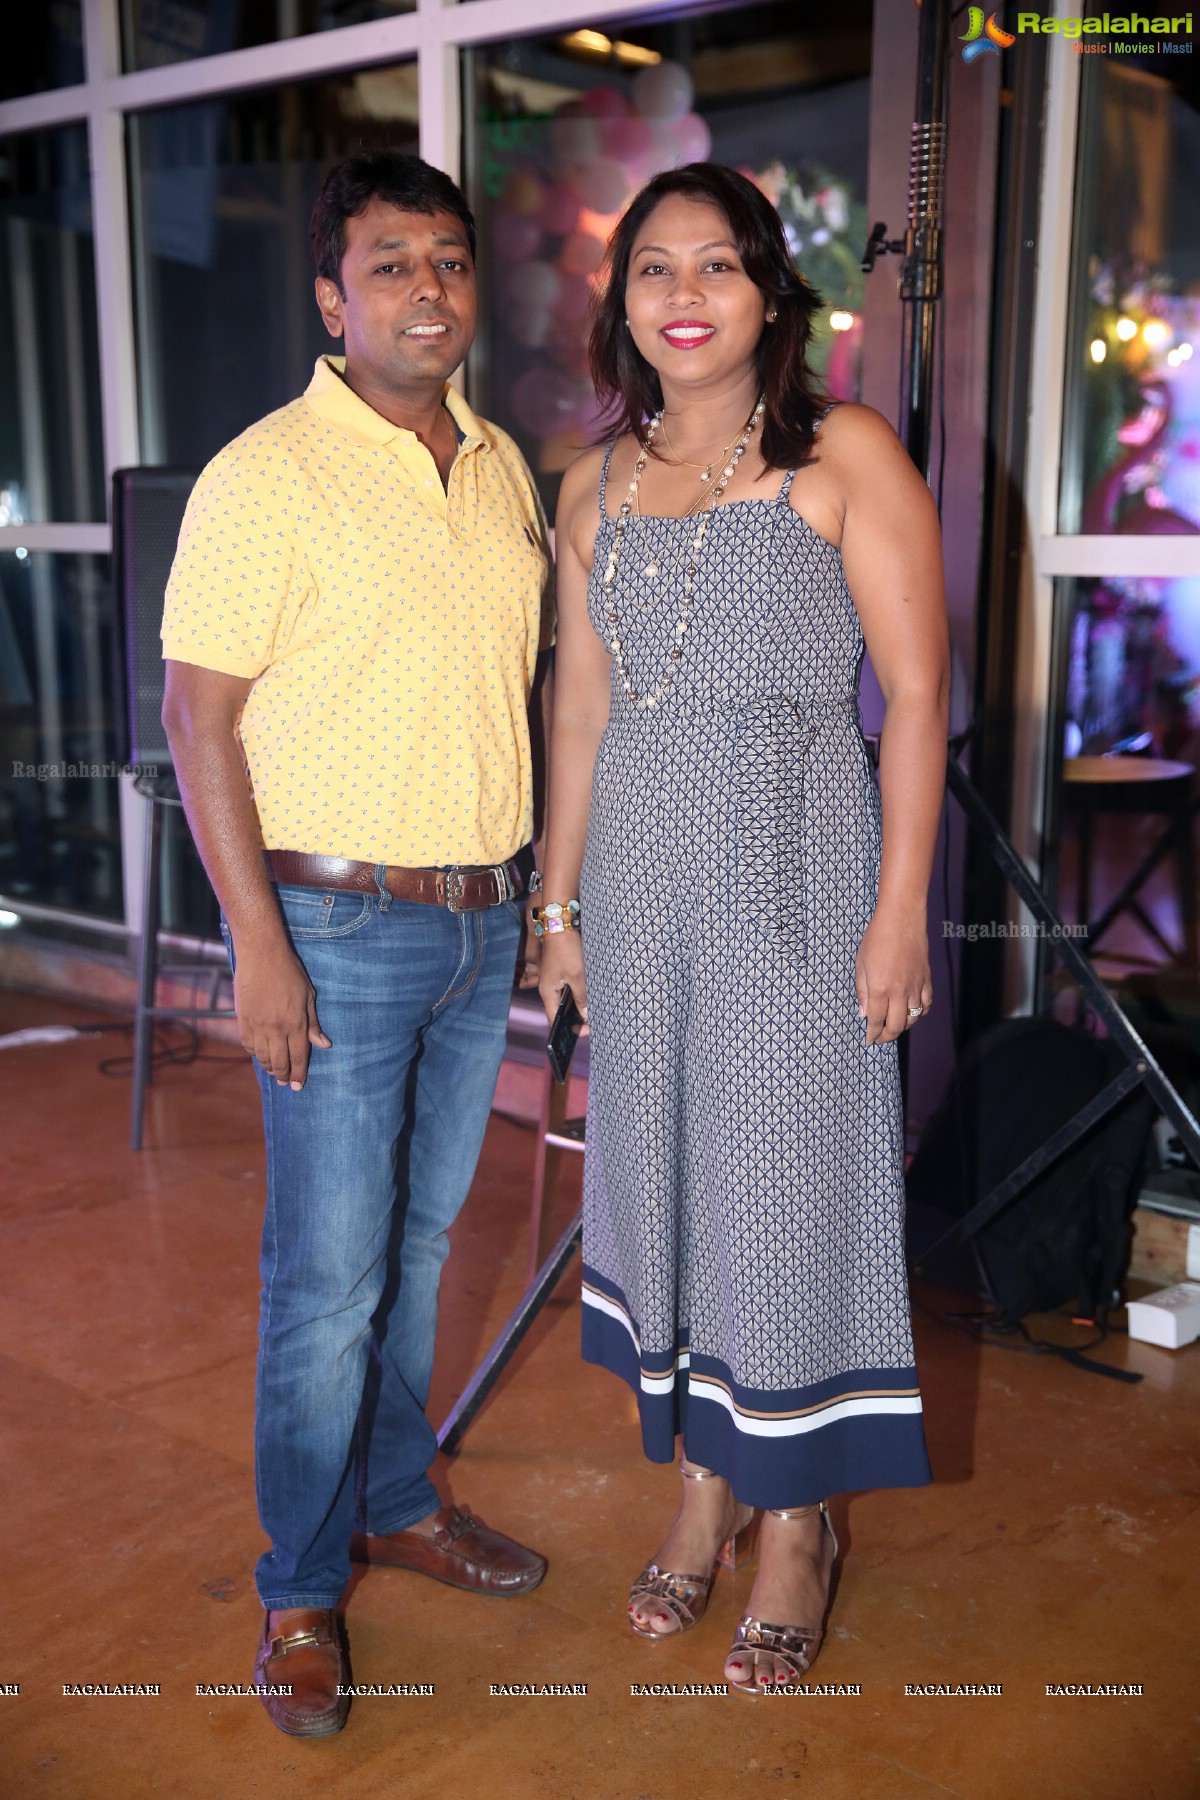 Neeru Mohan Birthday Bash at Sound Garden Cafe